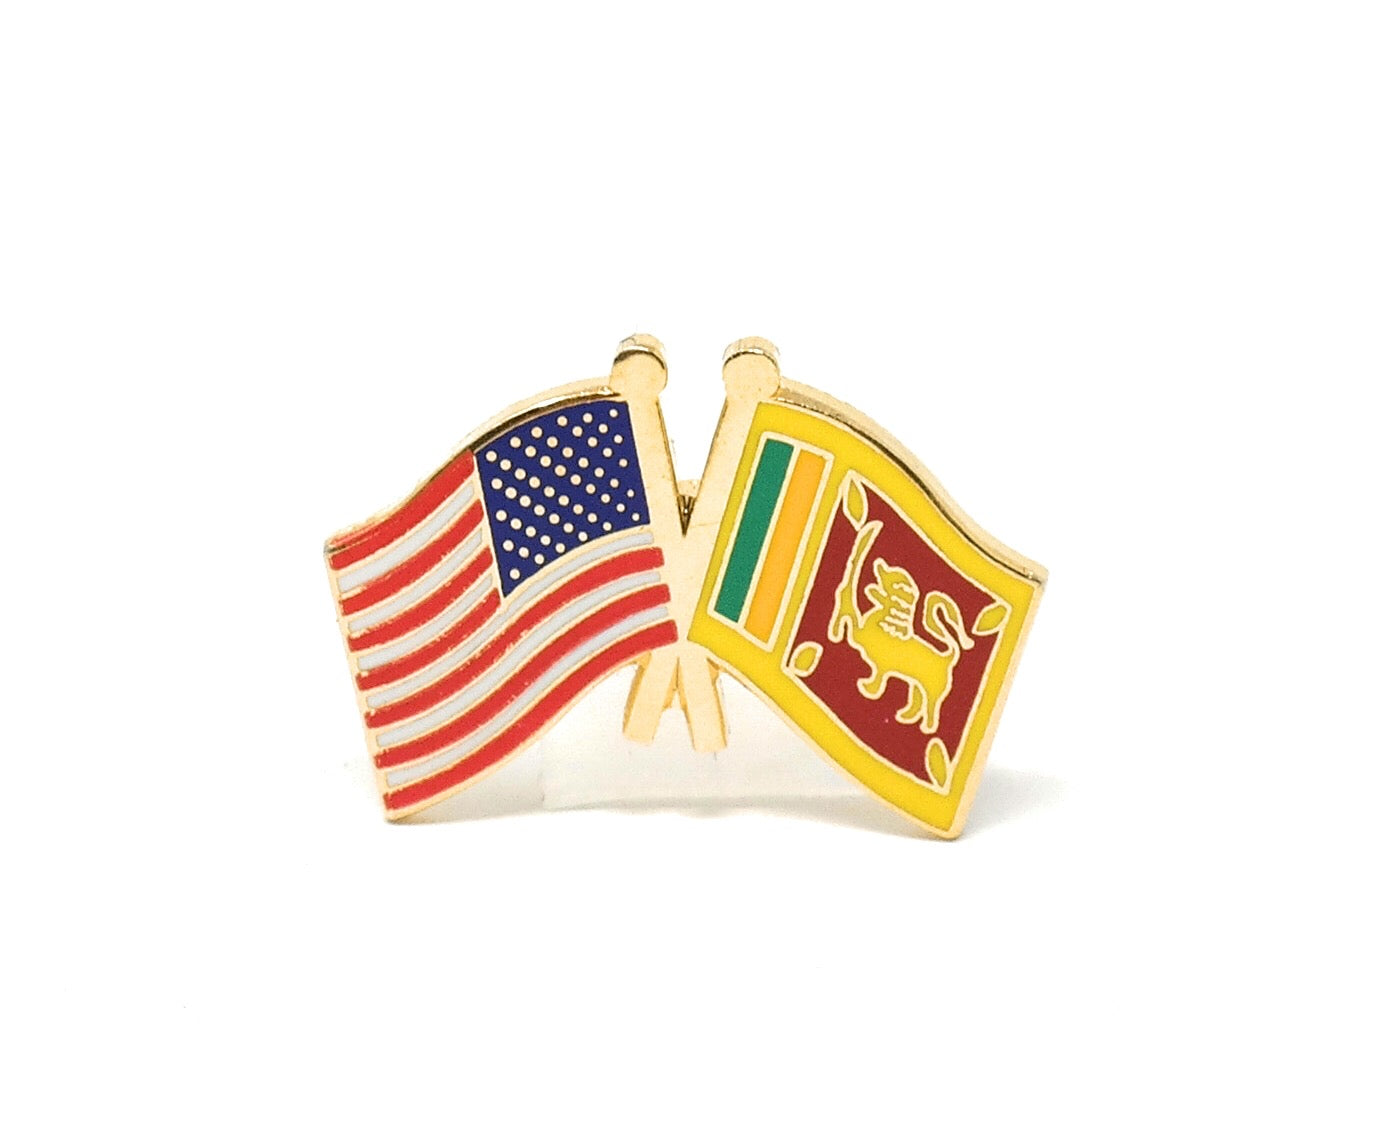 Sri Lanka & USA Friendship Flags Lapel Pin